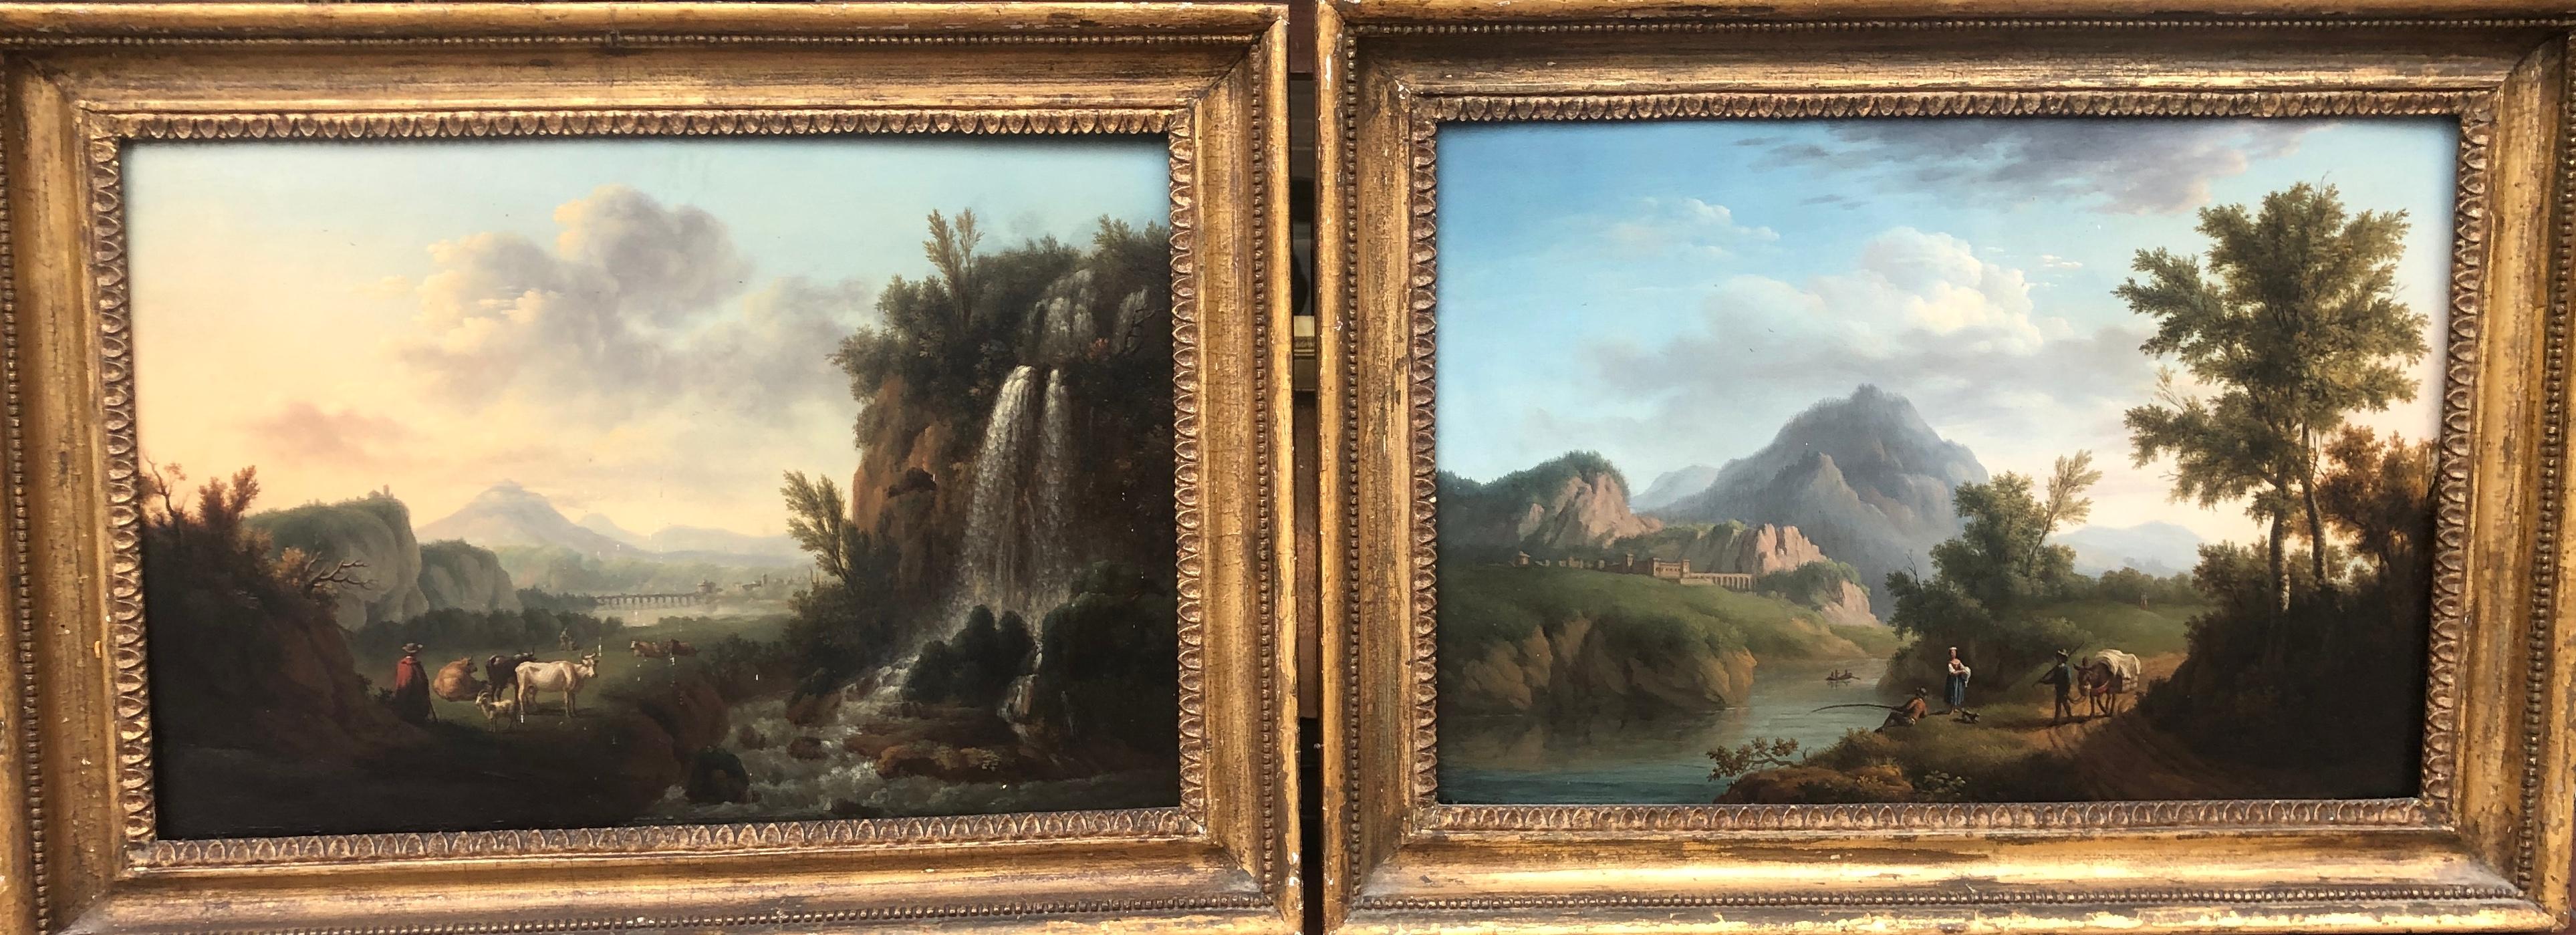 Petit Landscape Painting - Pair of 18th Century Landscapes on Panel